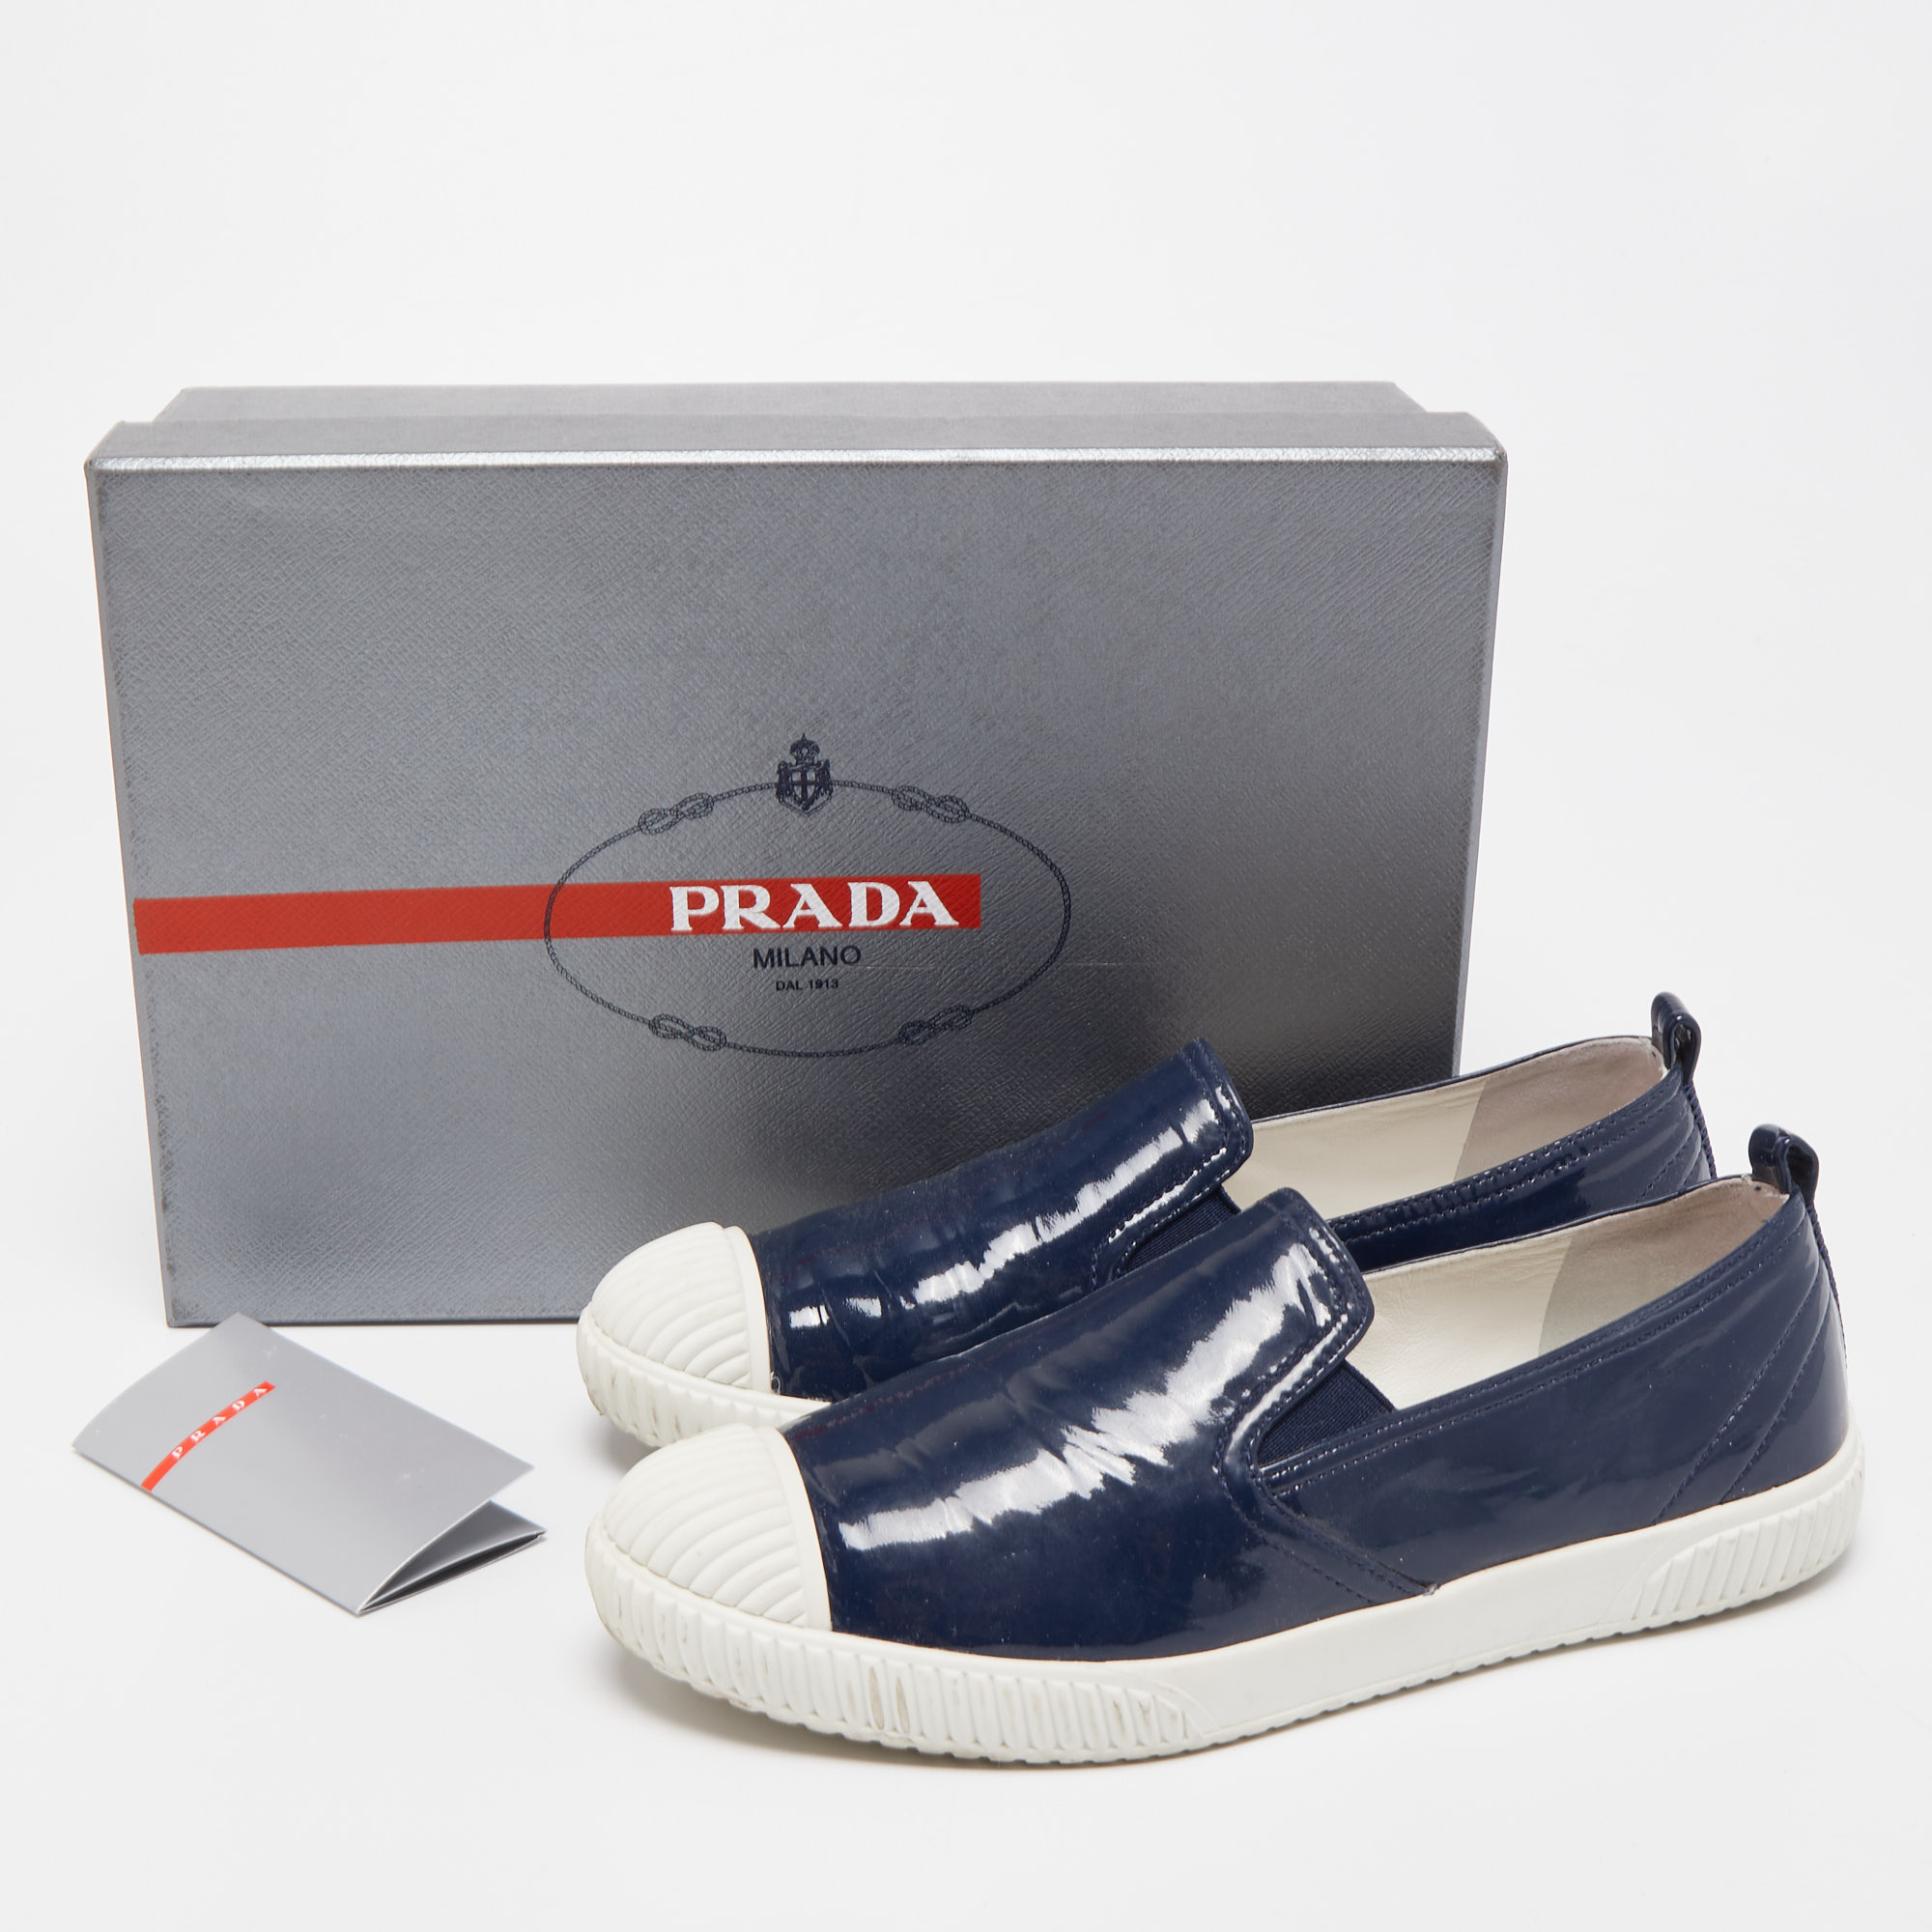 Prada Sport Navy Blue Patent Leather Slip-On Sneakers Size 37.5